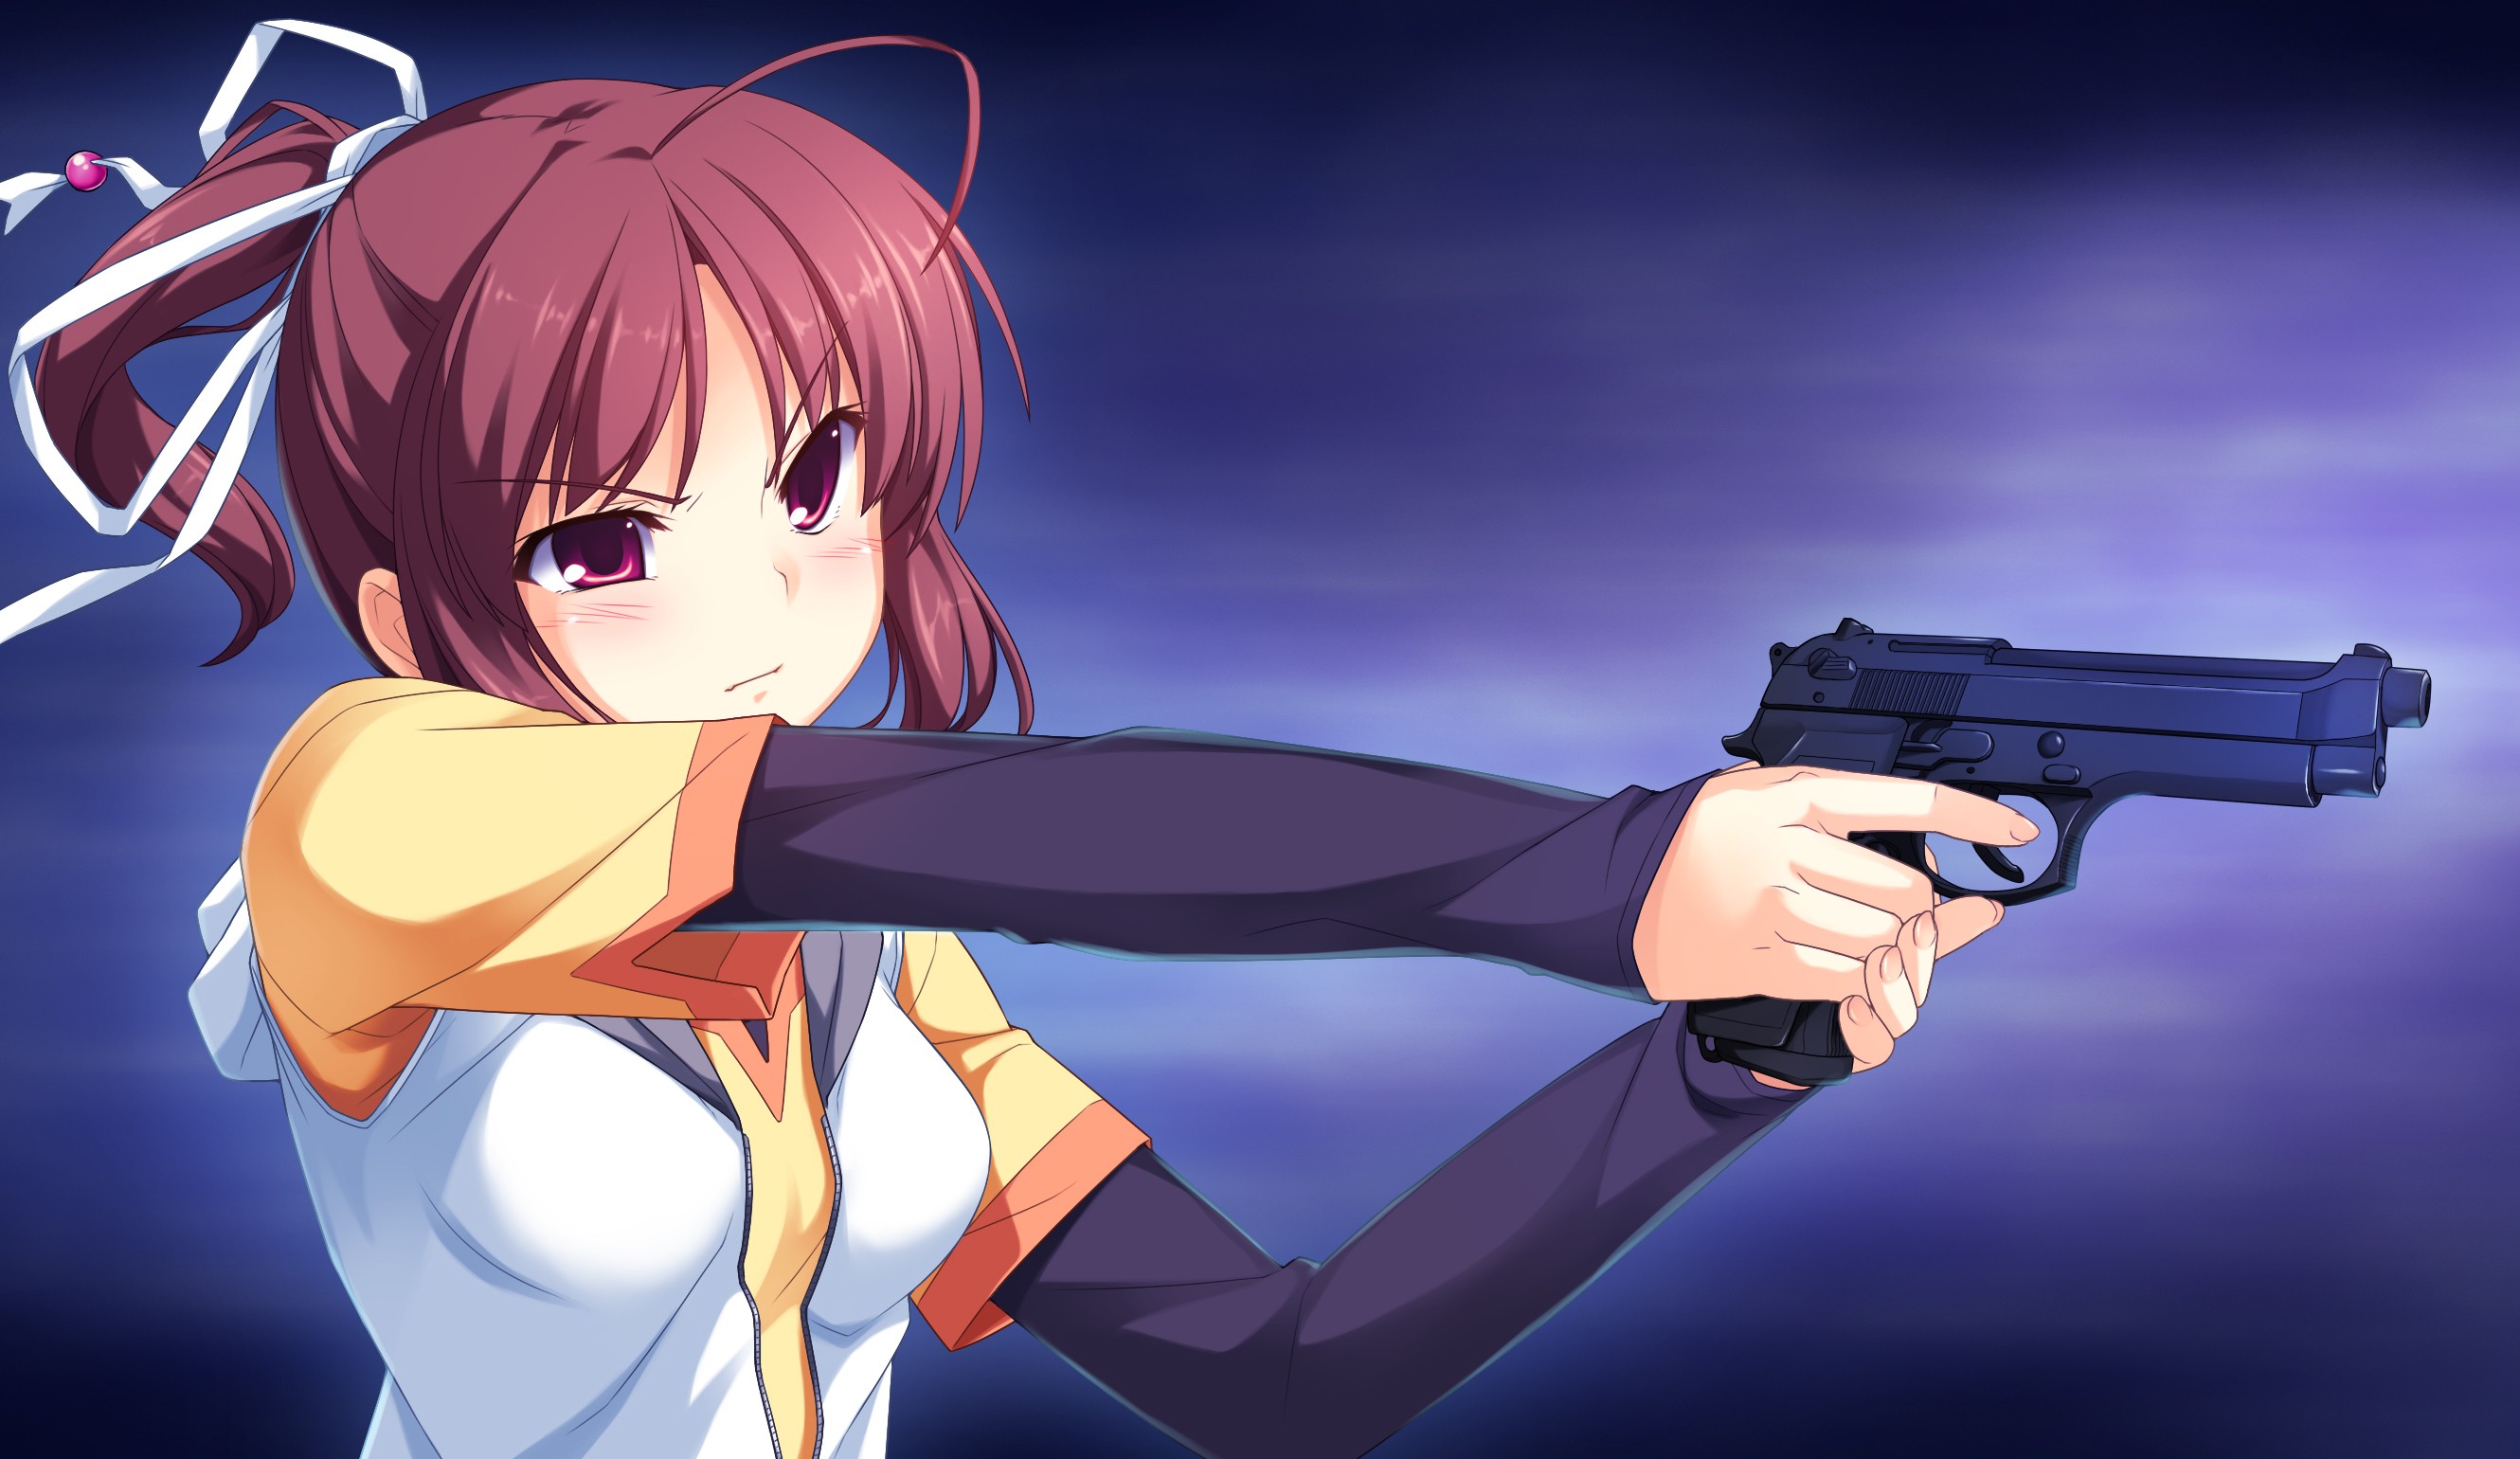 Beretta M9, SINCLIENT, Yanase Mai, Visual novel, Machine gun Wallpaper